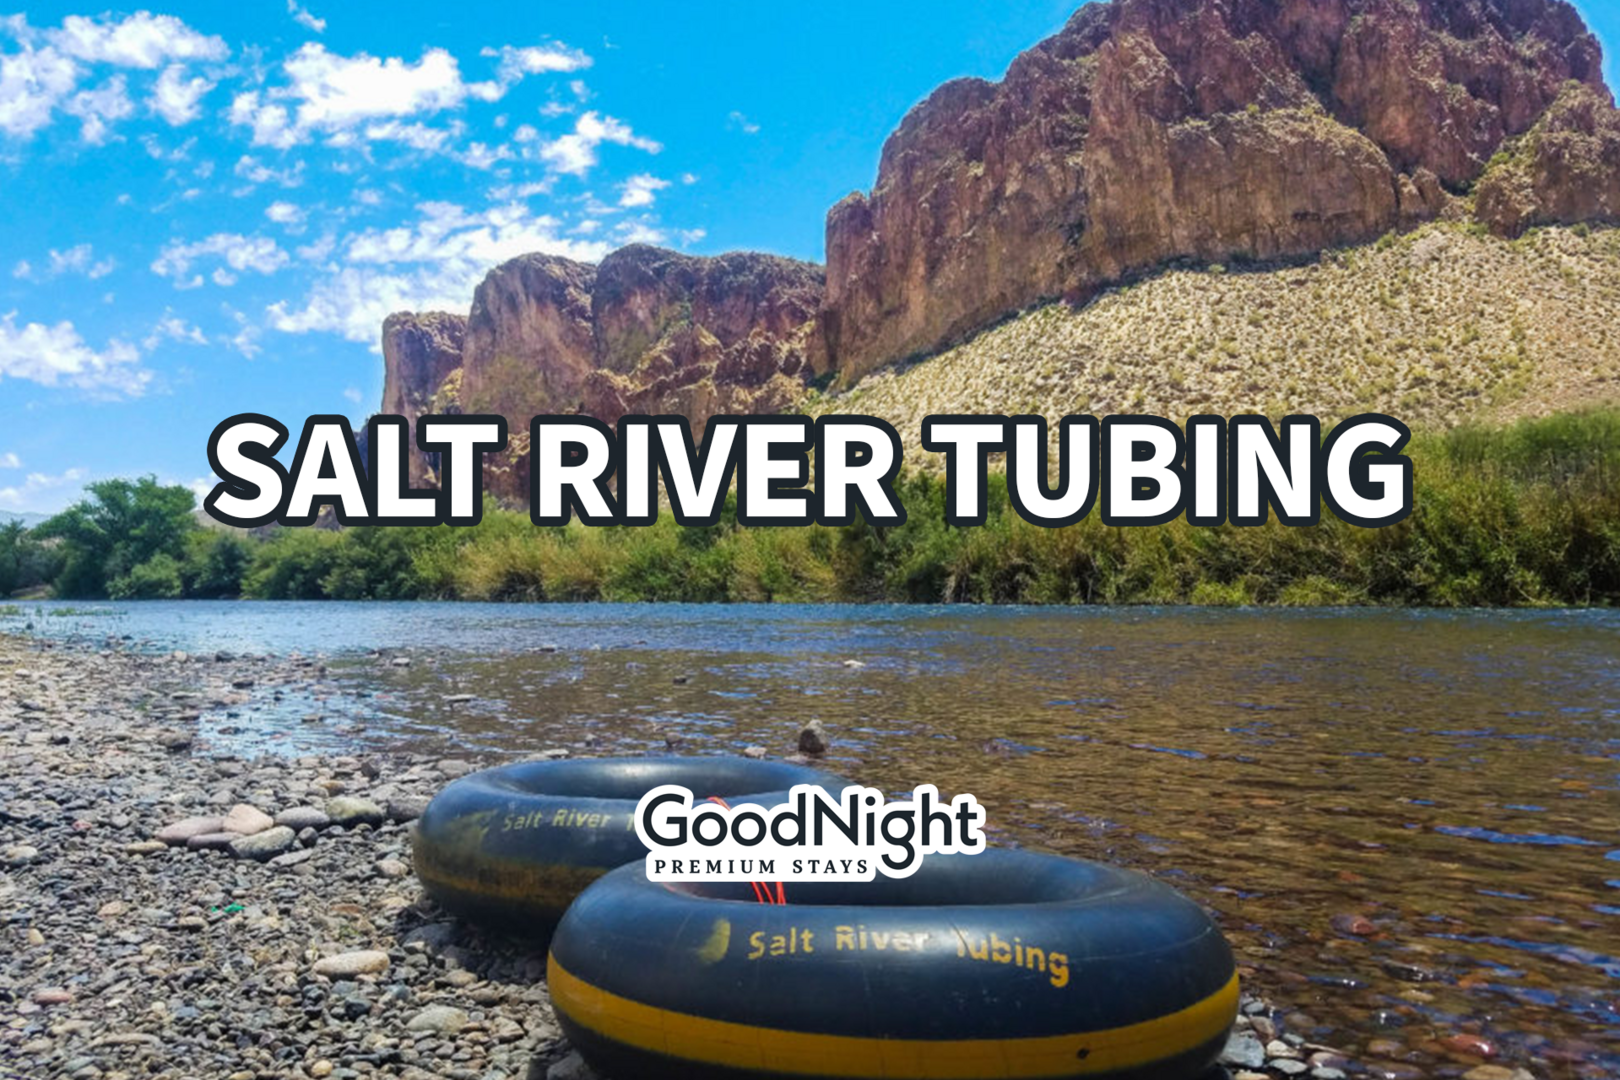 Salt River Tubing: 34 mins